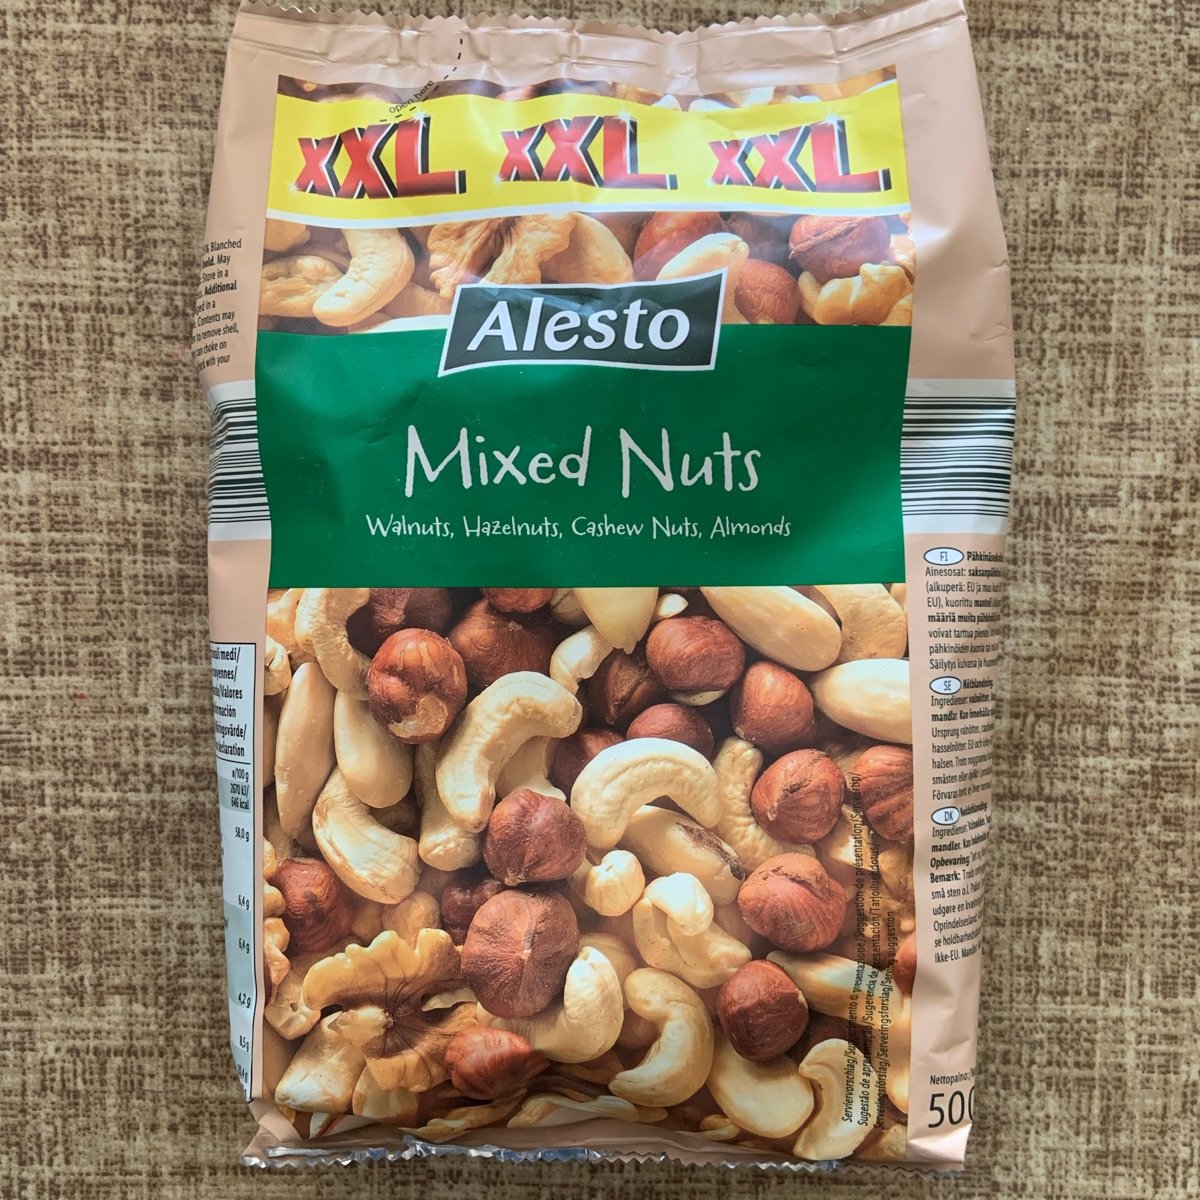 Alesto Mixed Nuts XXL Review abillion 